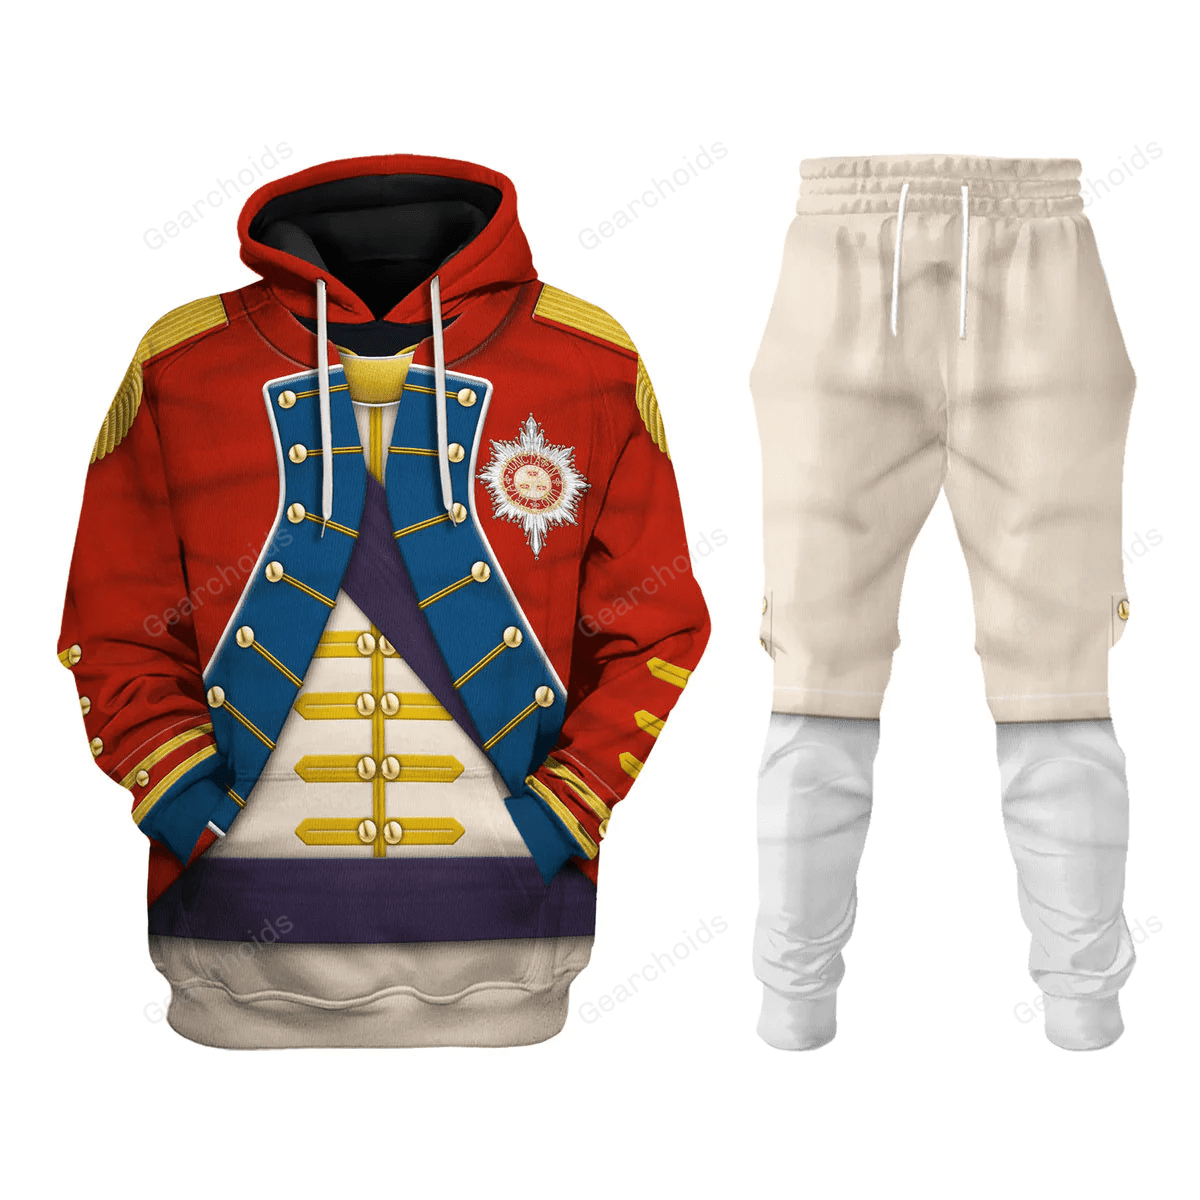 General Washington - The American Revolution Uniform Hoodie Sweatshirt Sweatpants